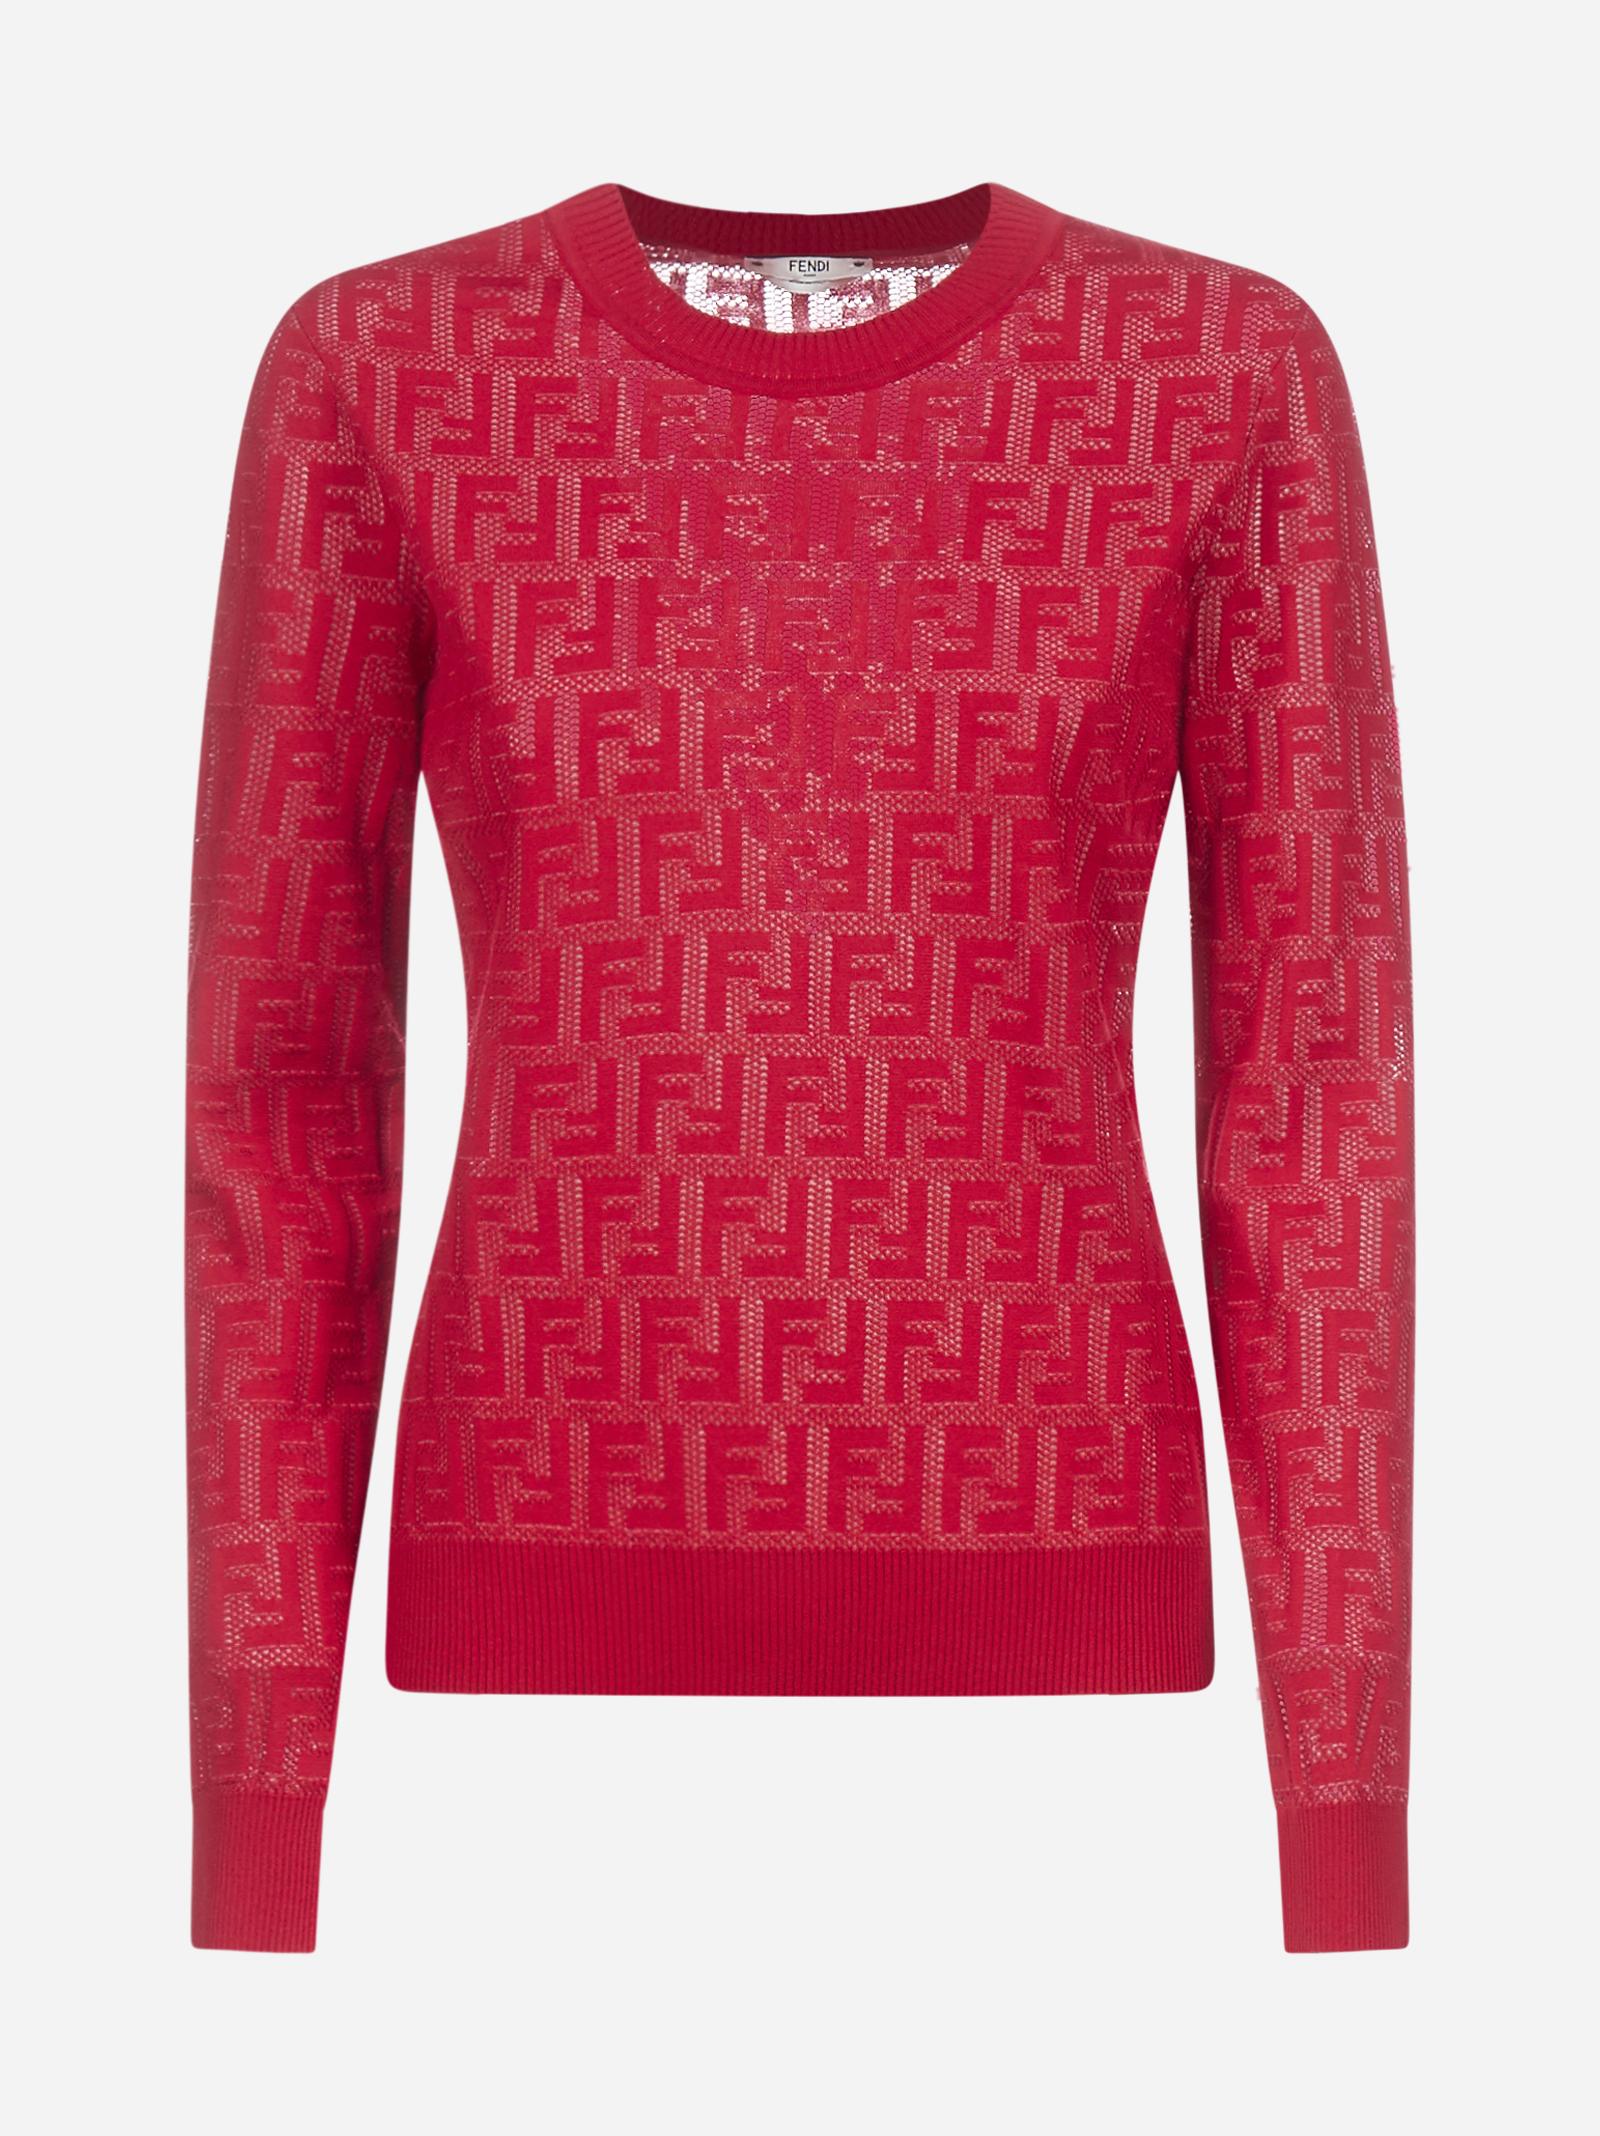 Fendi Cotton Ff-motif Jacquard Knit Pencil Sweater in Red - Lyst